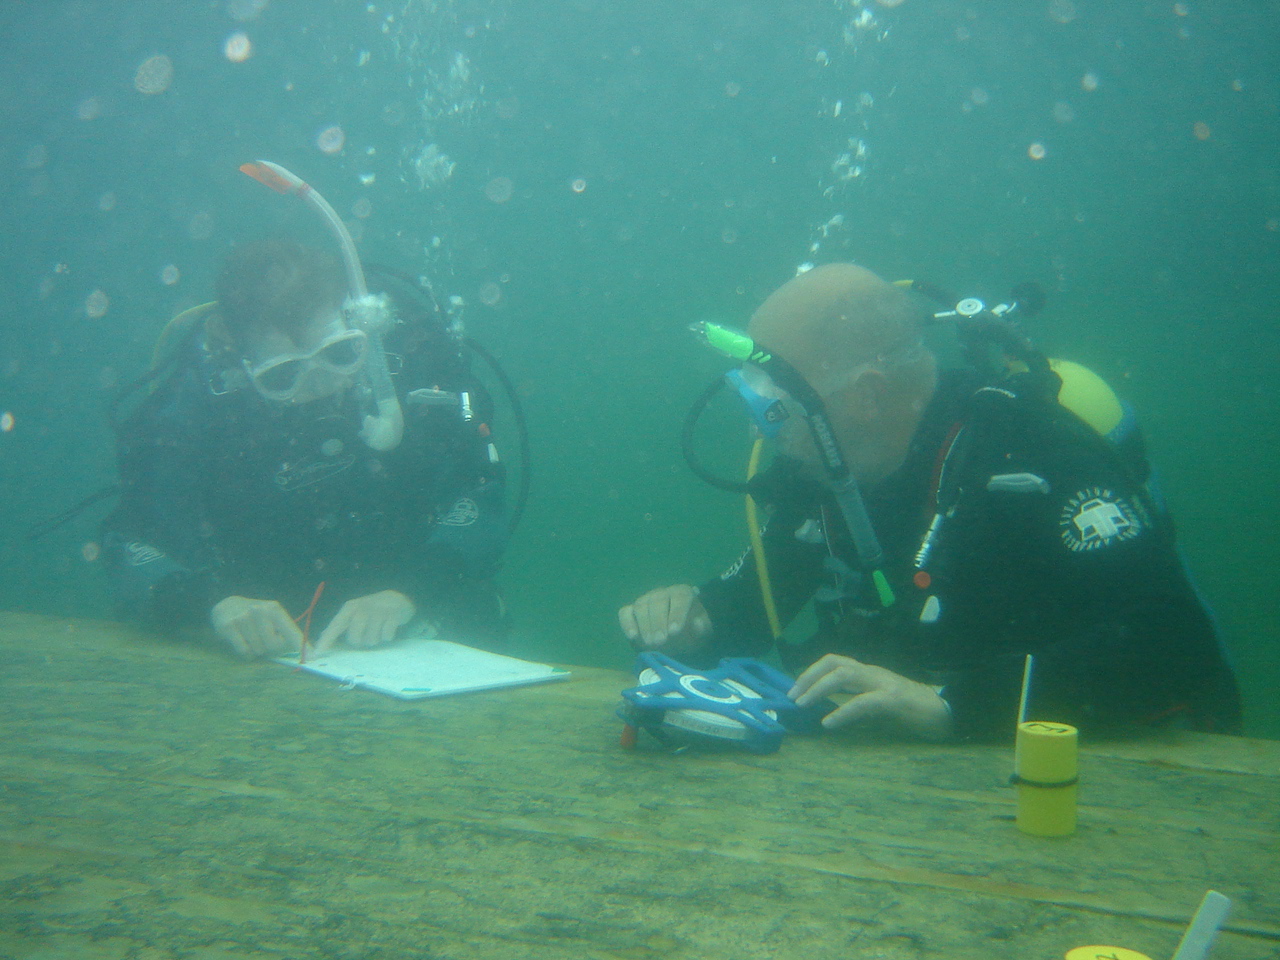 Underwater surveying